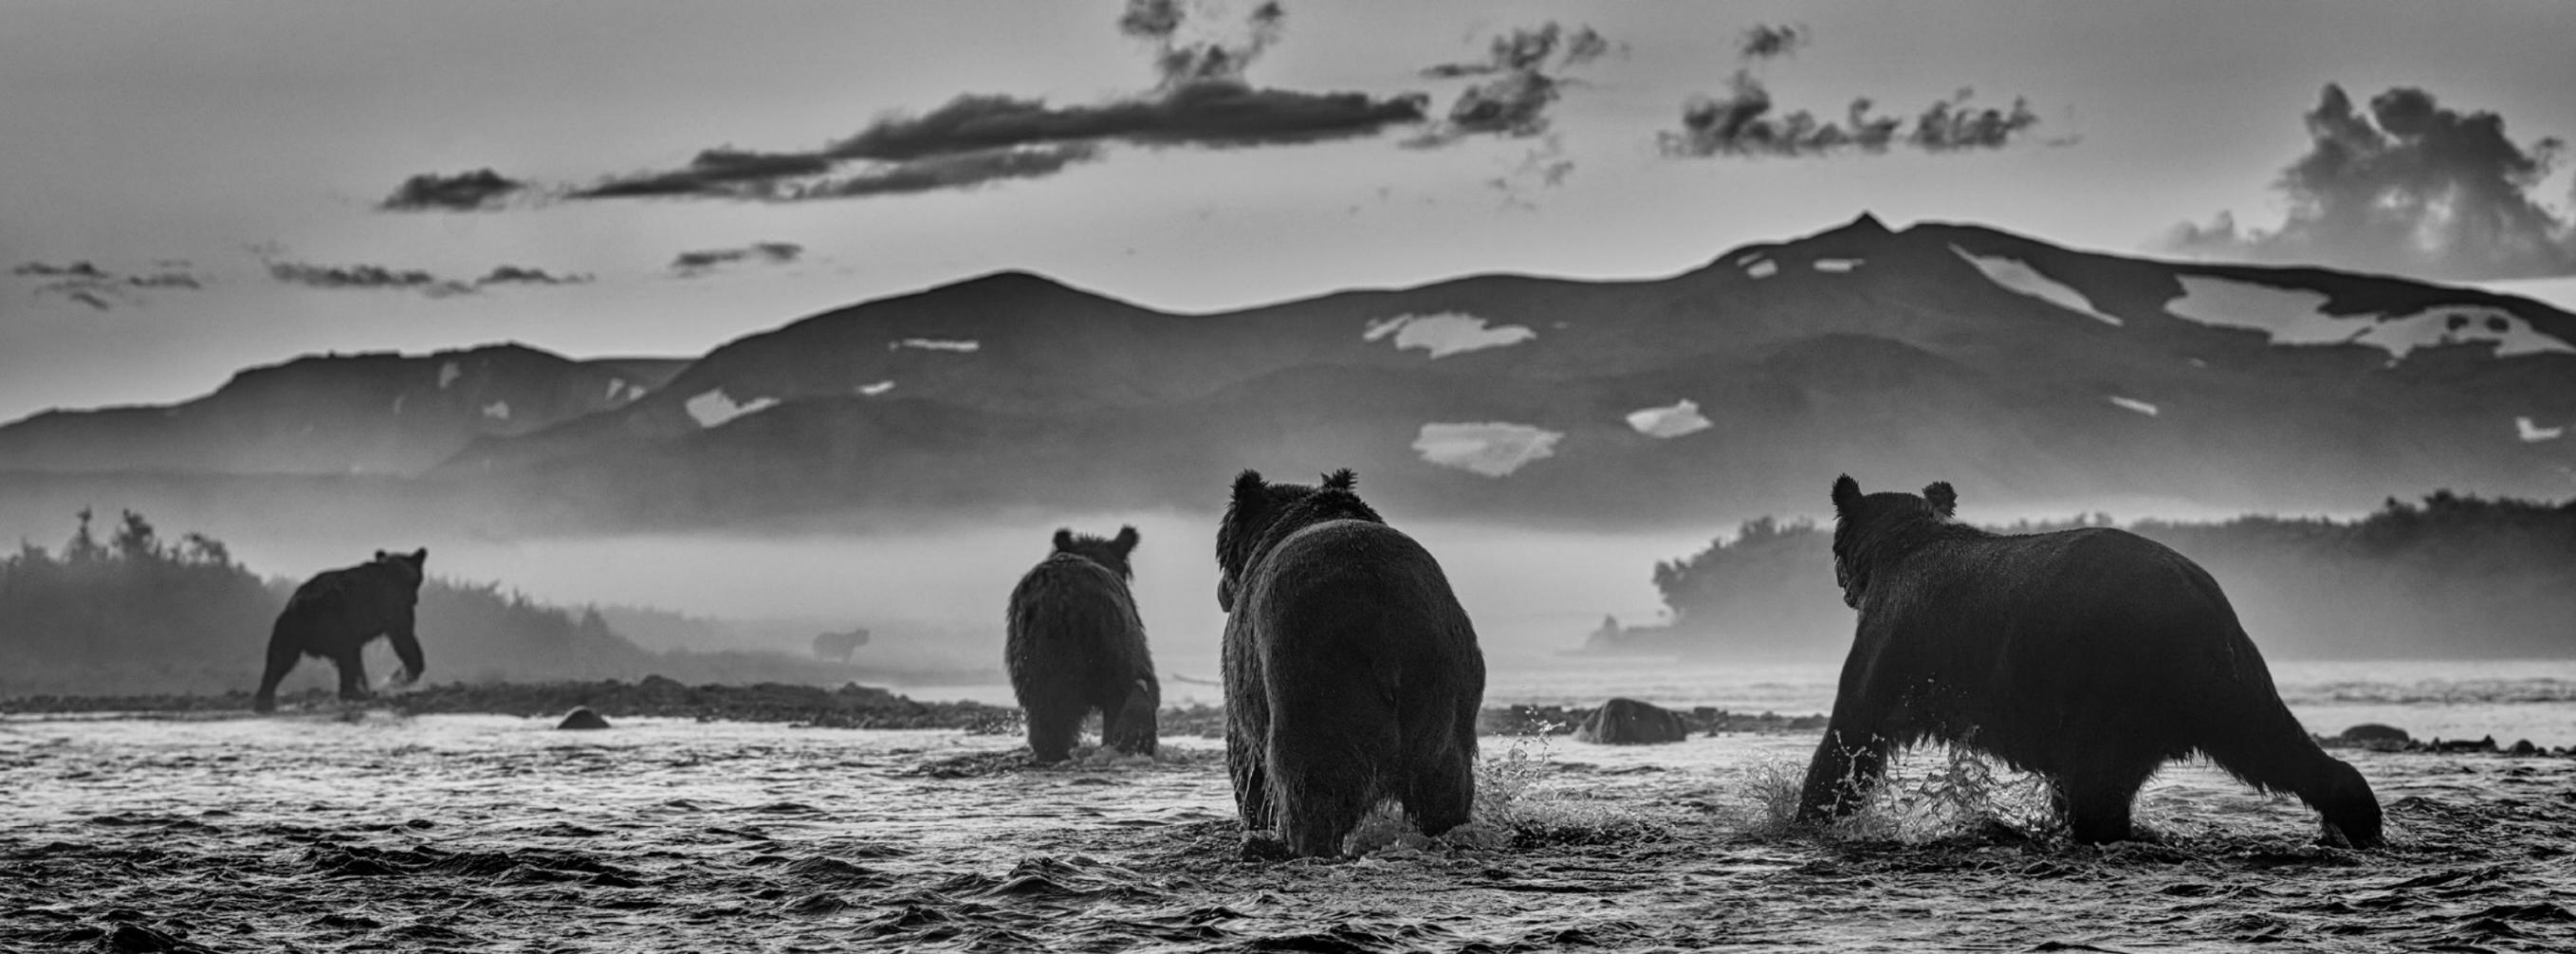 Bear Market - Photograph by David Yarrow